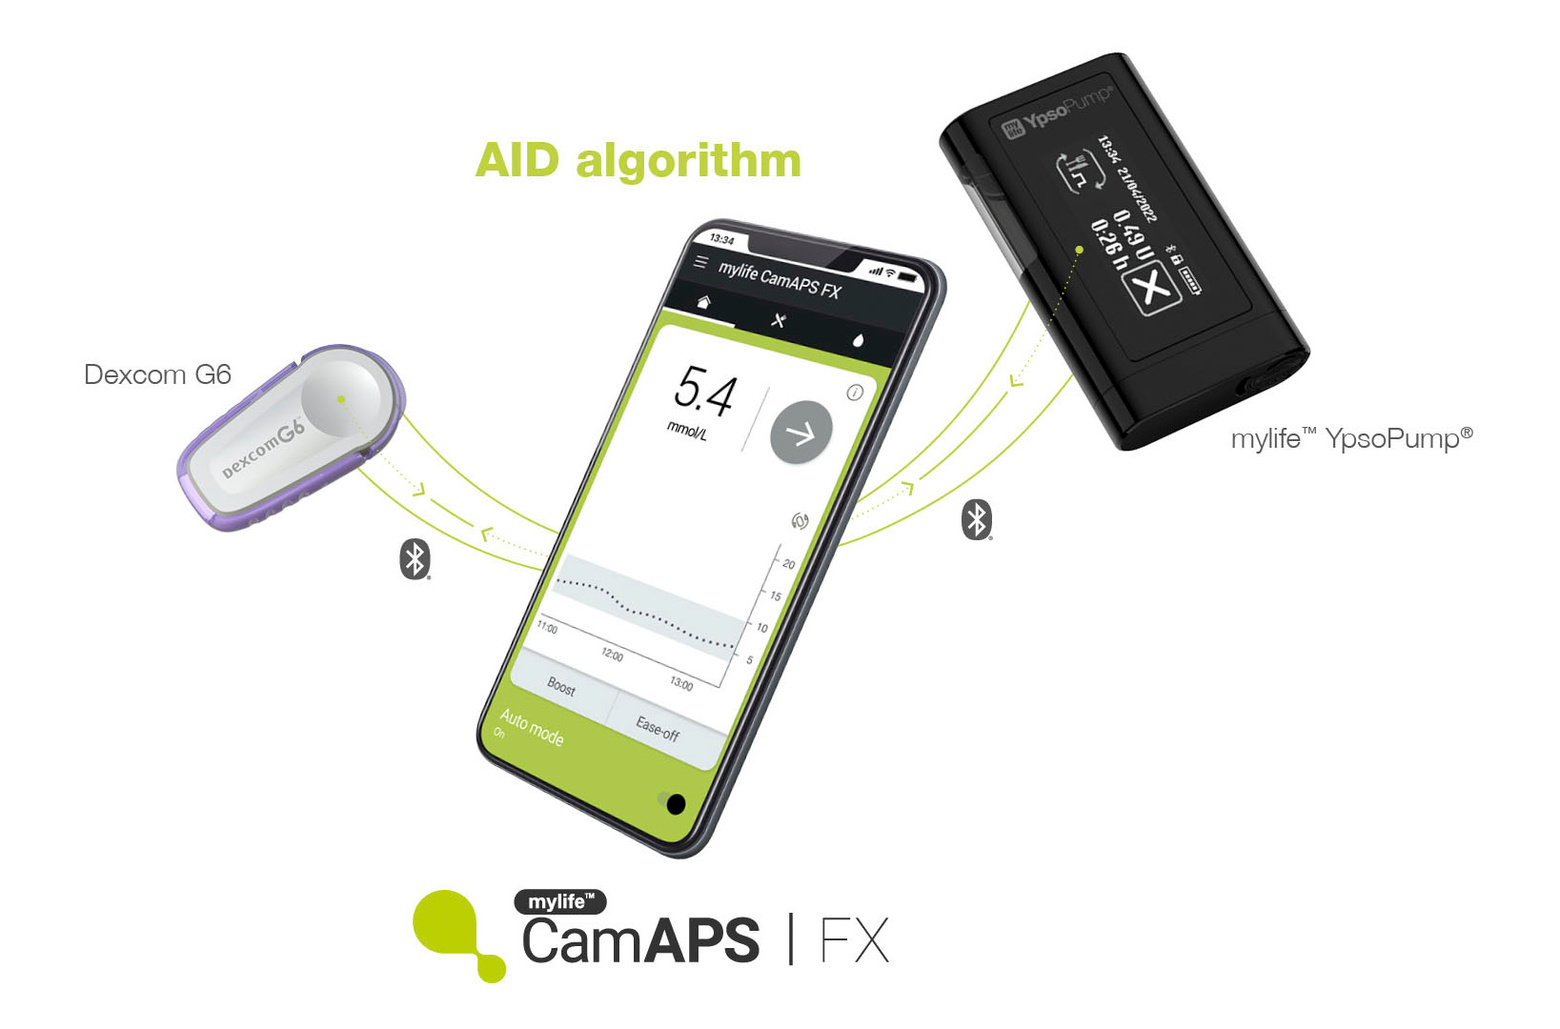 mylife YpsoPump CamAPS FX mit Dexcom G6 Starter Kit mmol/l